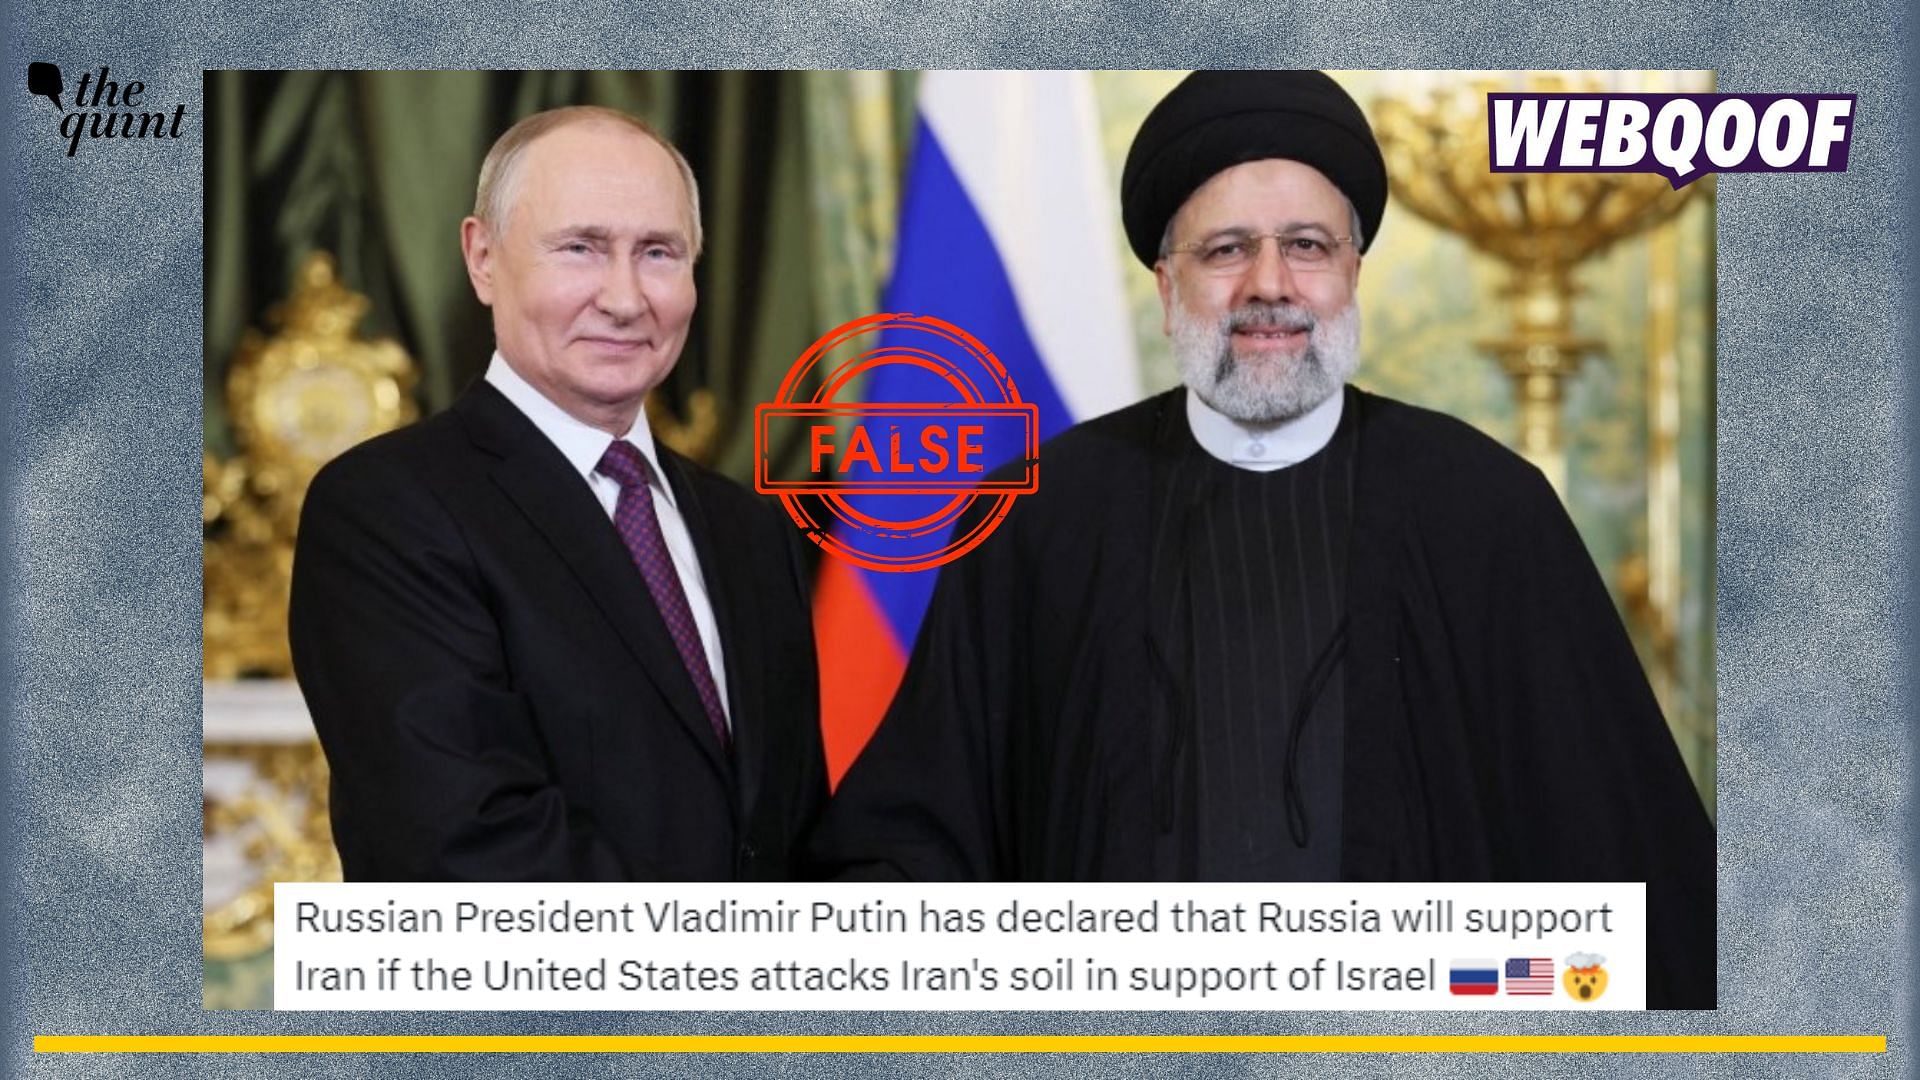 Did Vladimir Putin Say He Will Support Iran if US Attacks Iranian Soil? No!